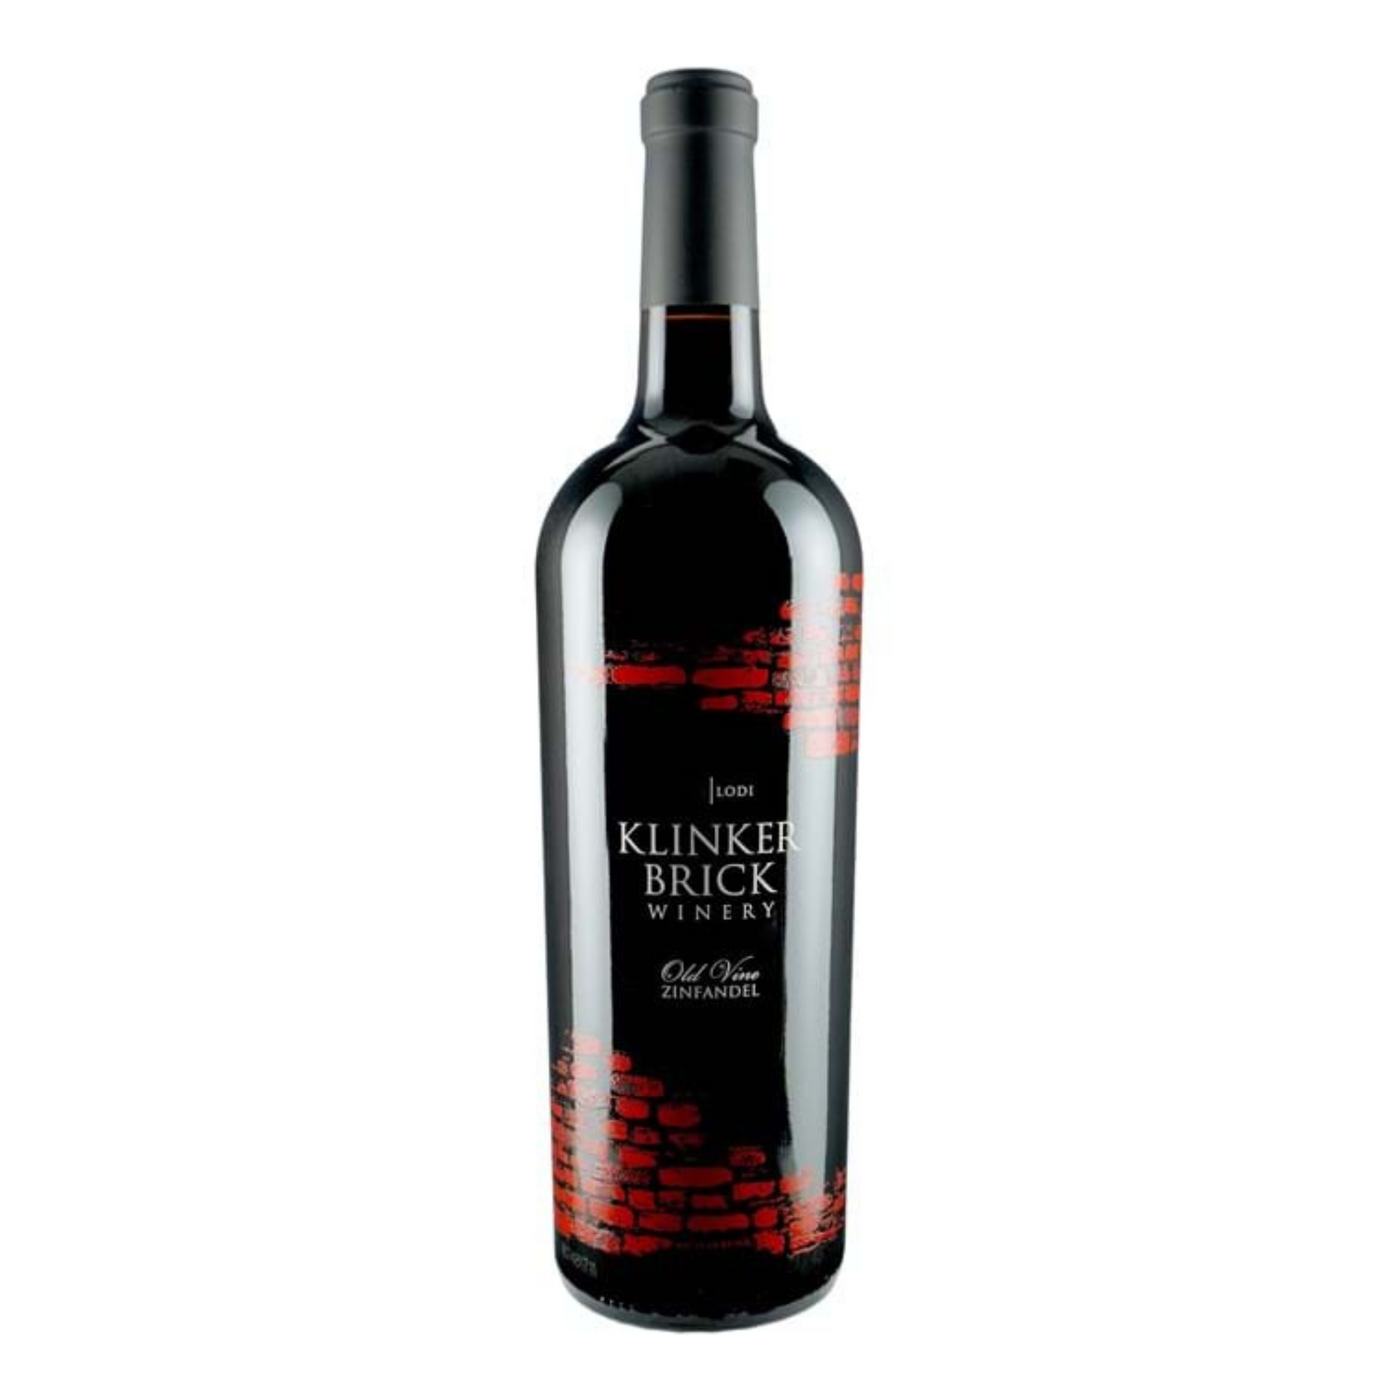 Klinker Brick Winery Old Vine Zinfandel 2019